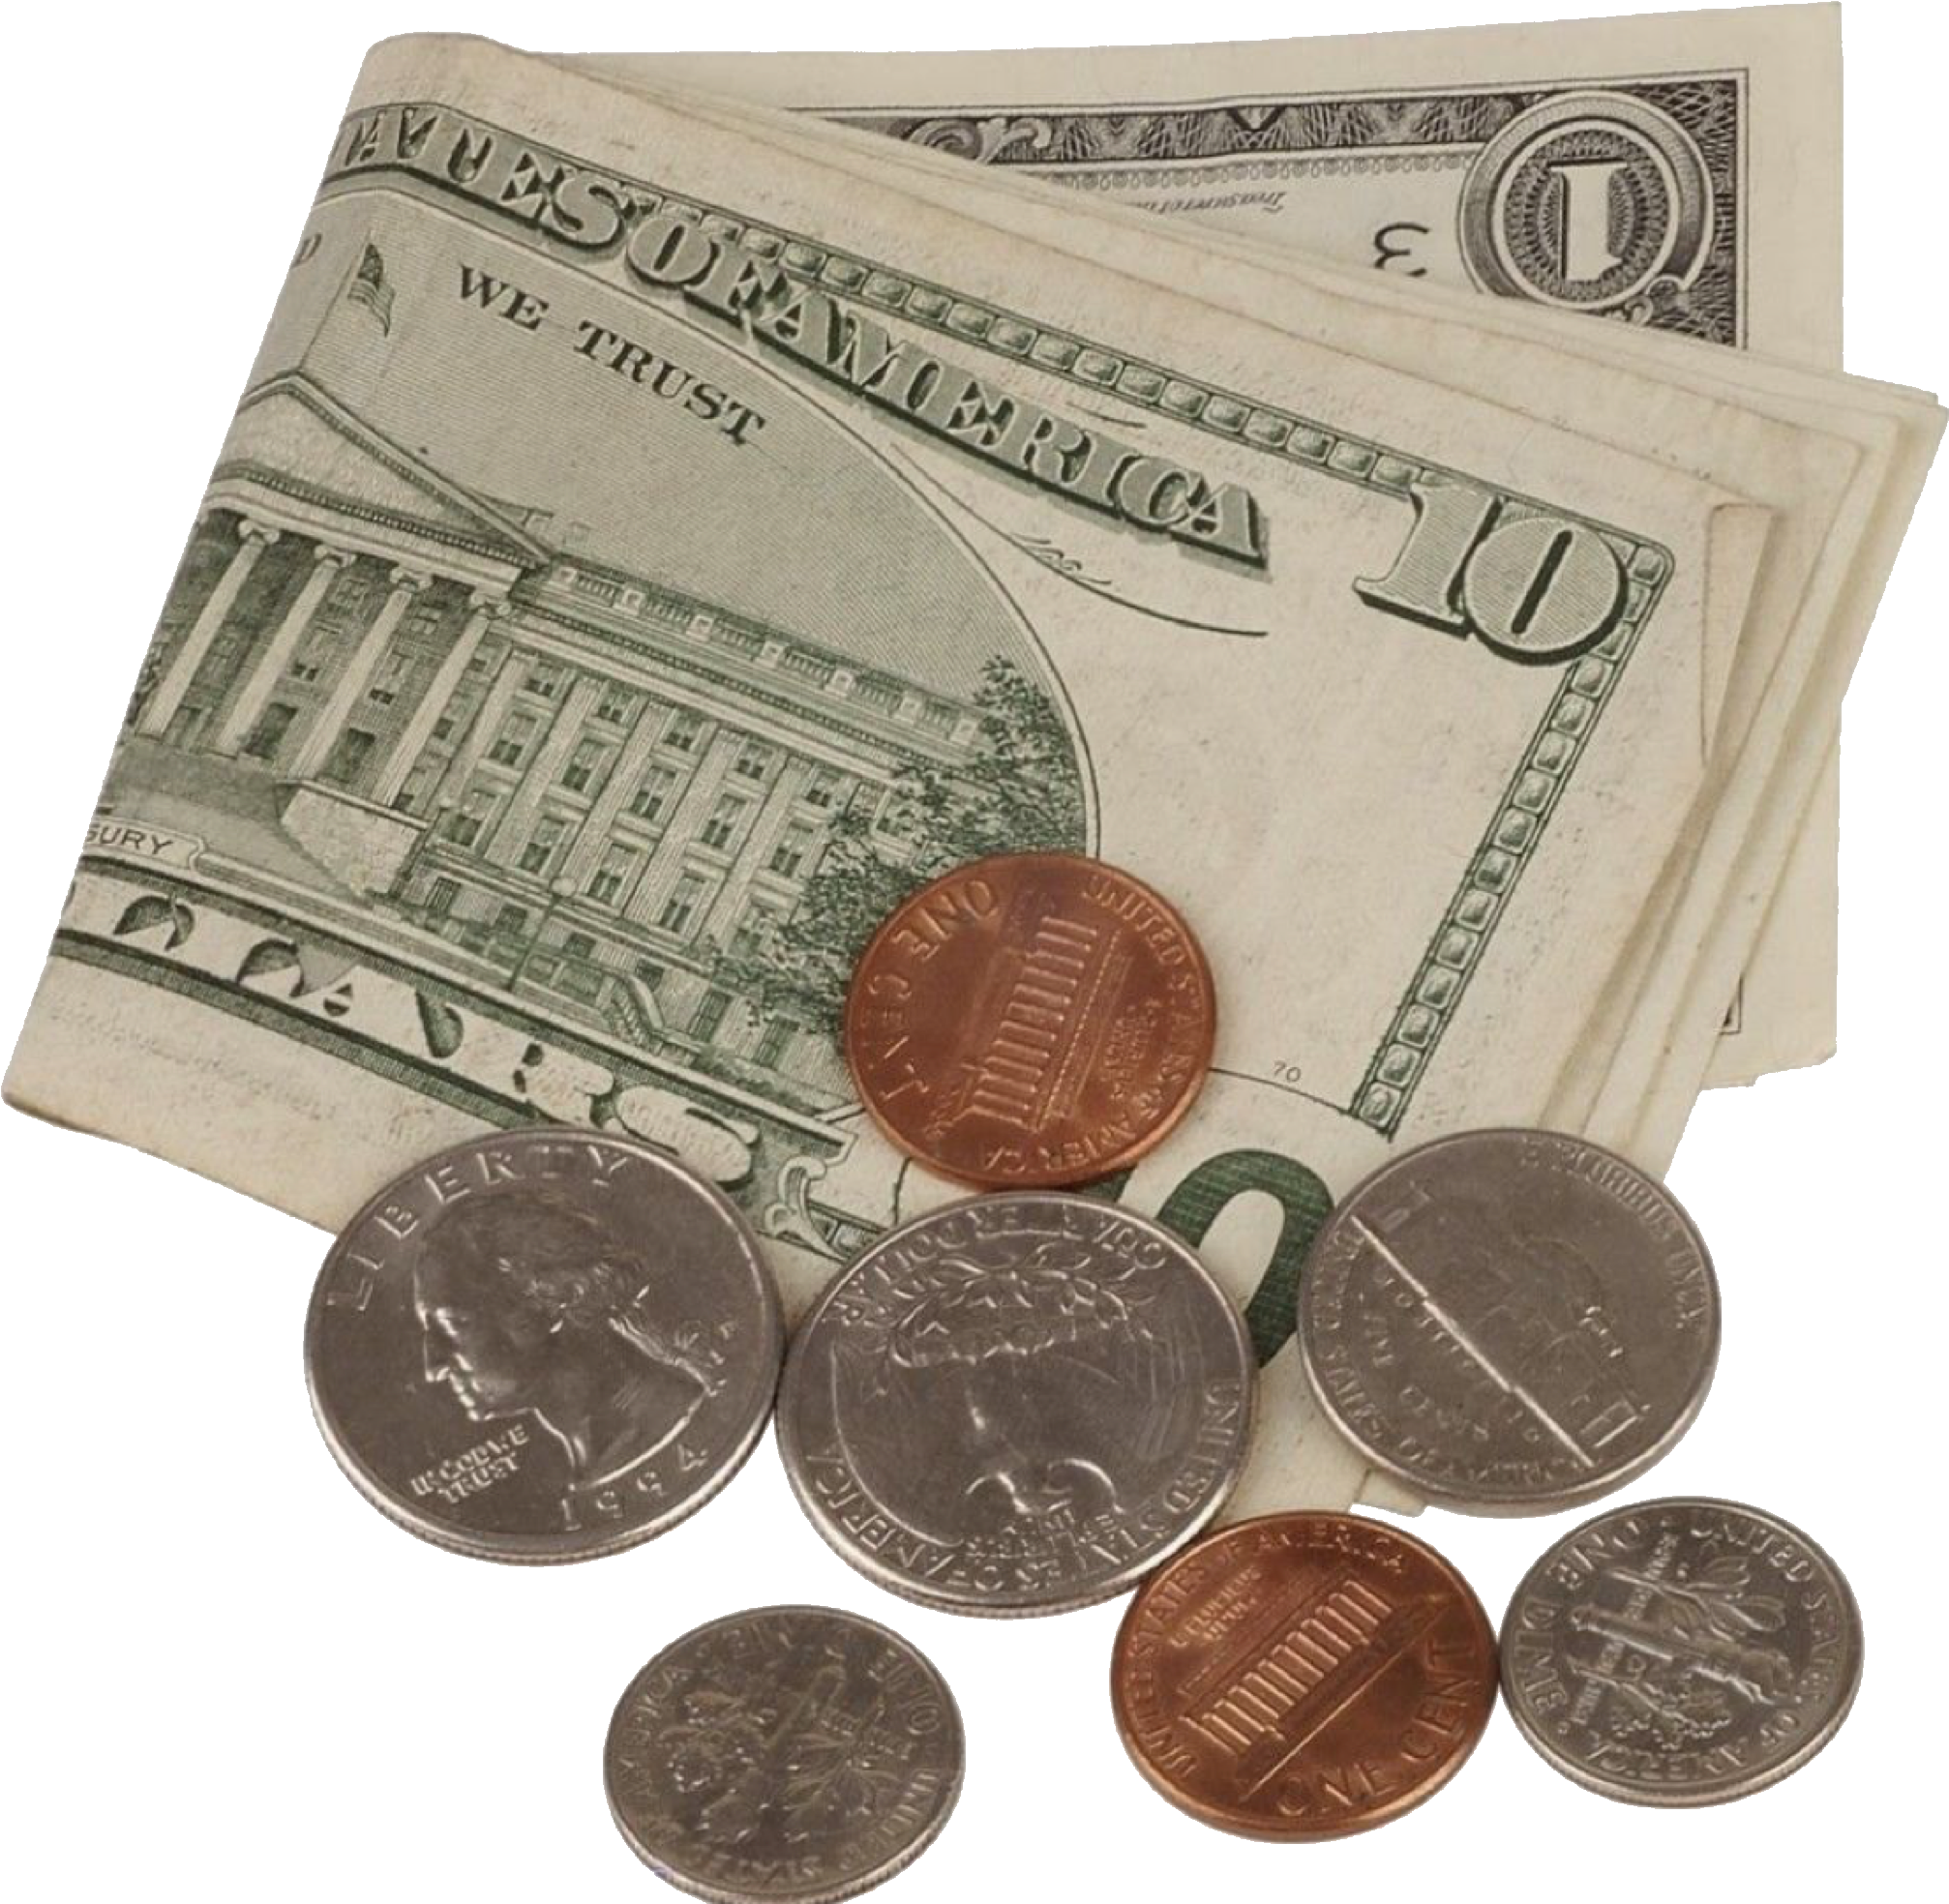 U S Currency Coinsand Bills